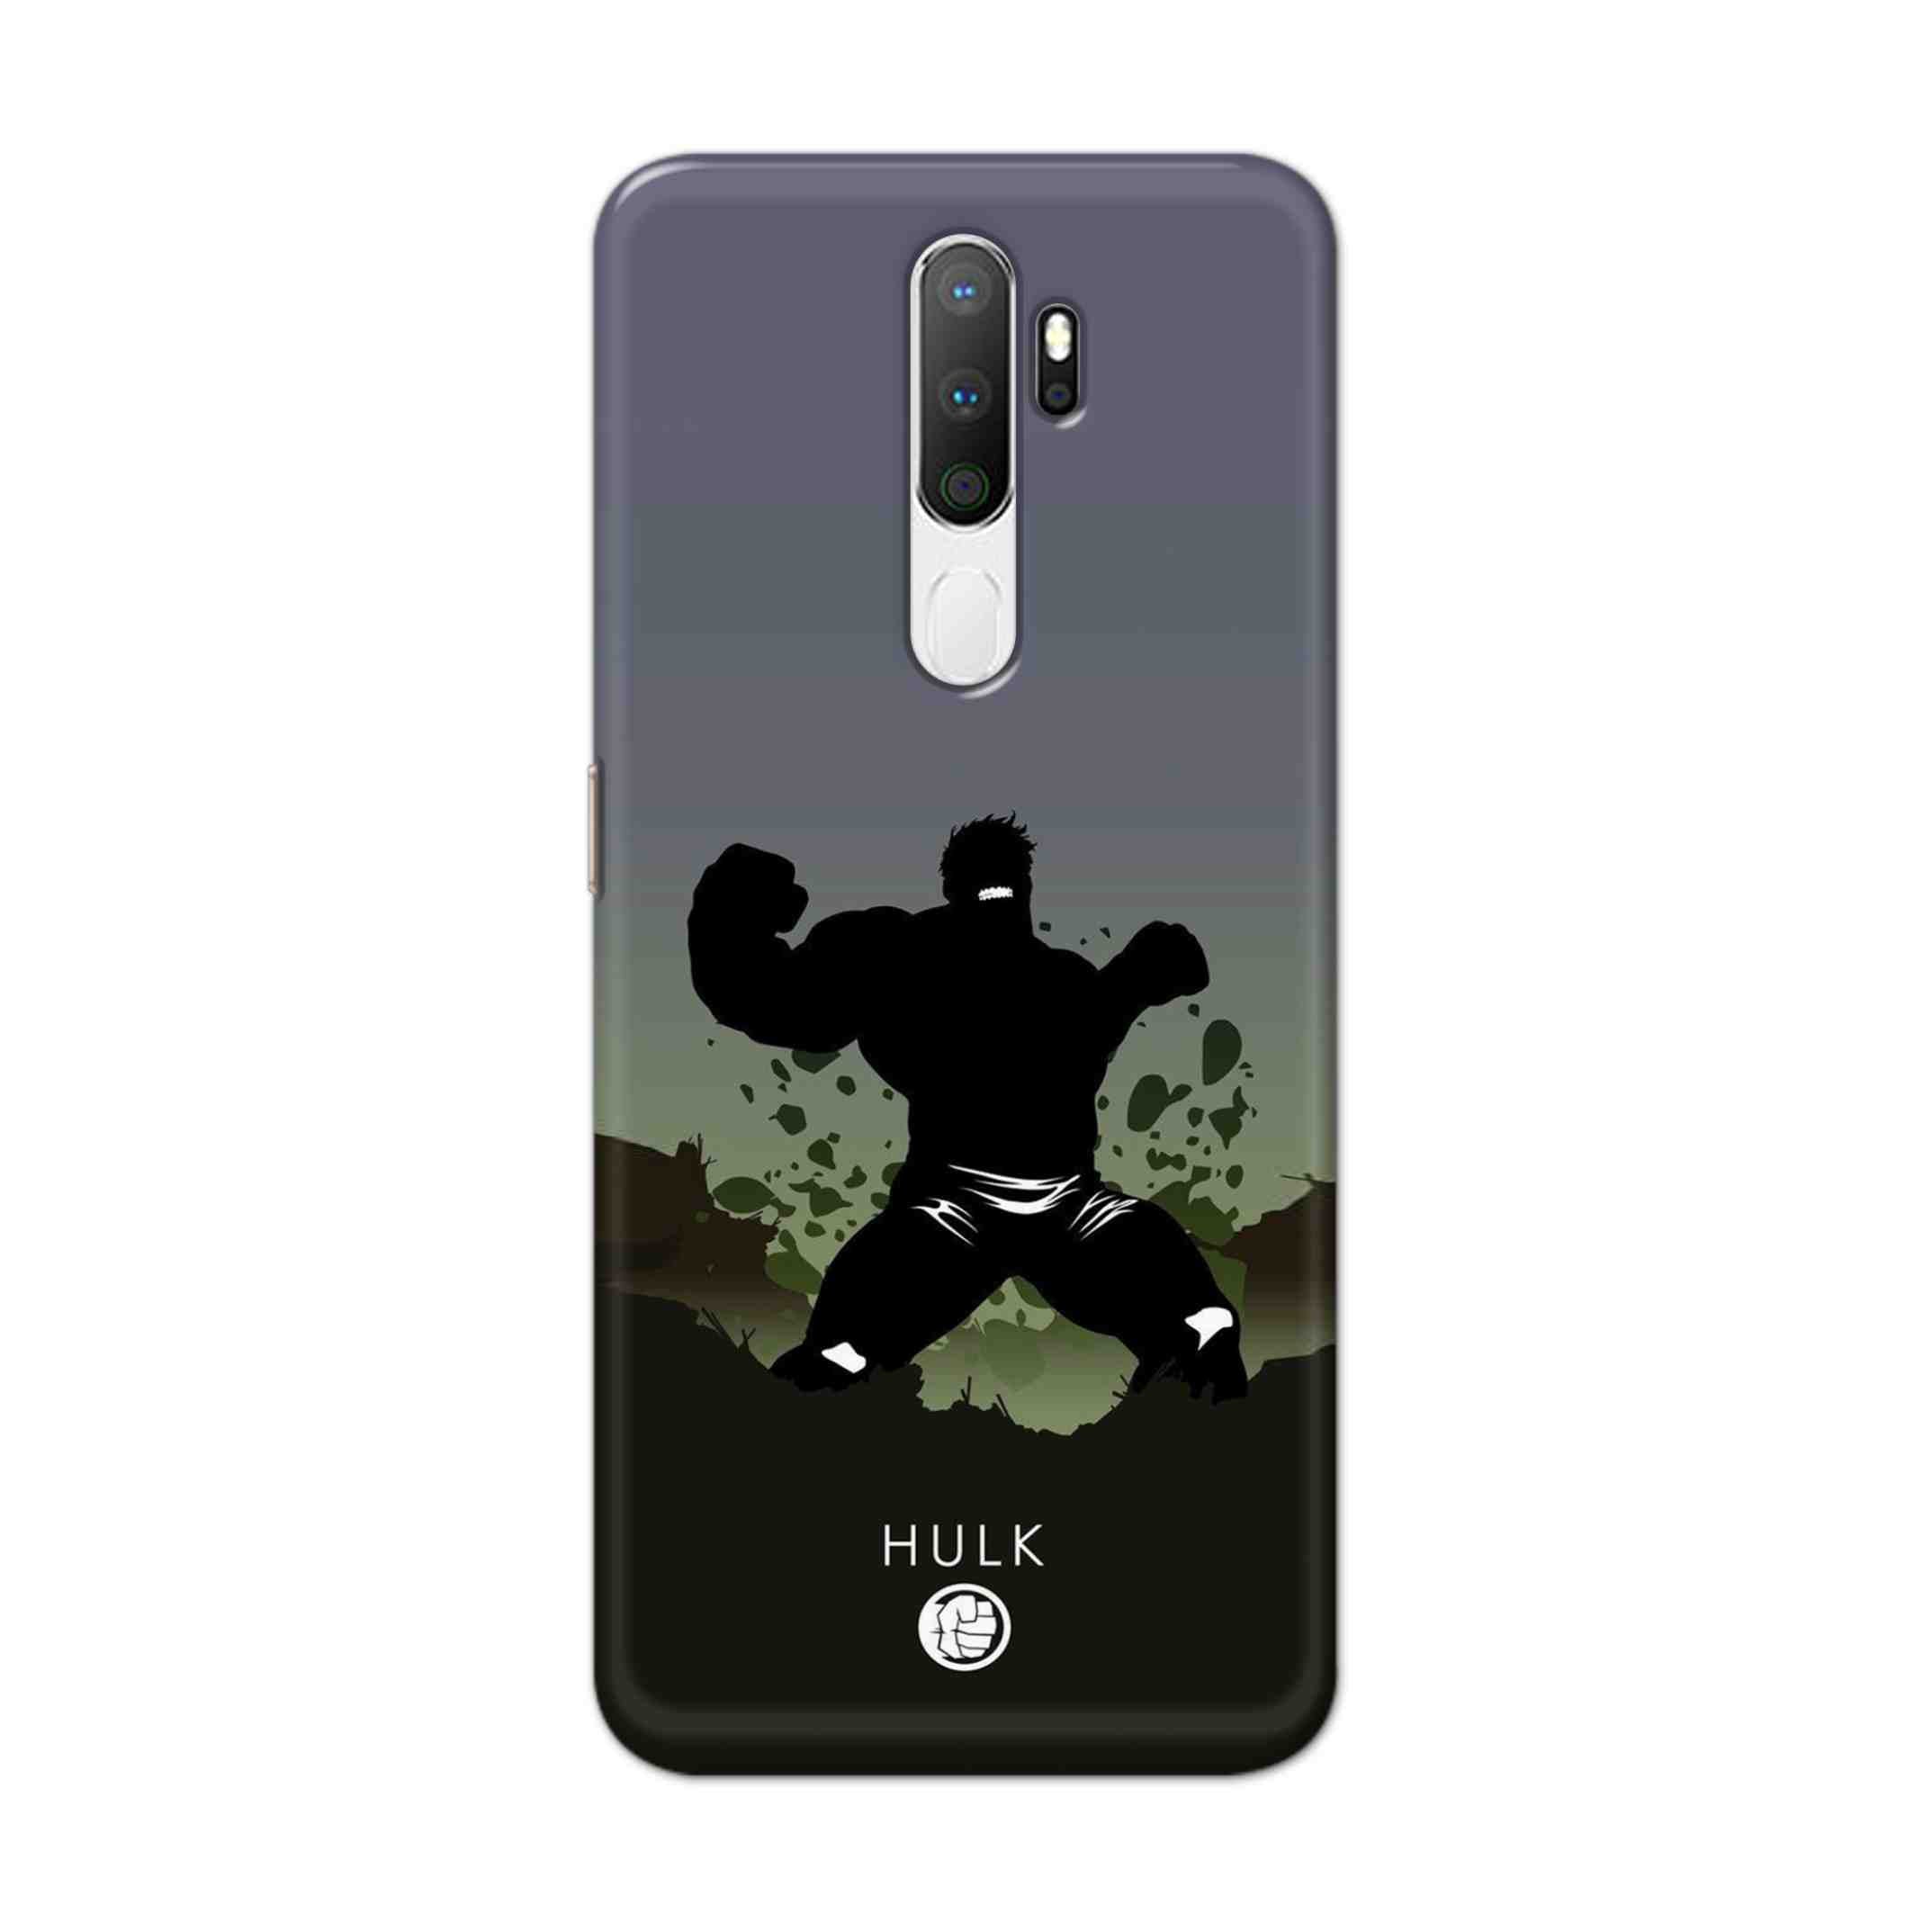 Buy Hulk Drax Hard Back Mobile Phone Case Cover For Oppo A5 (2020) Online